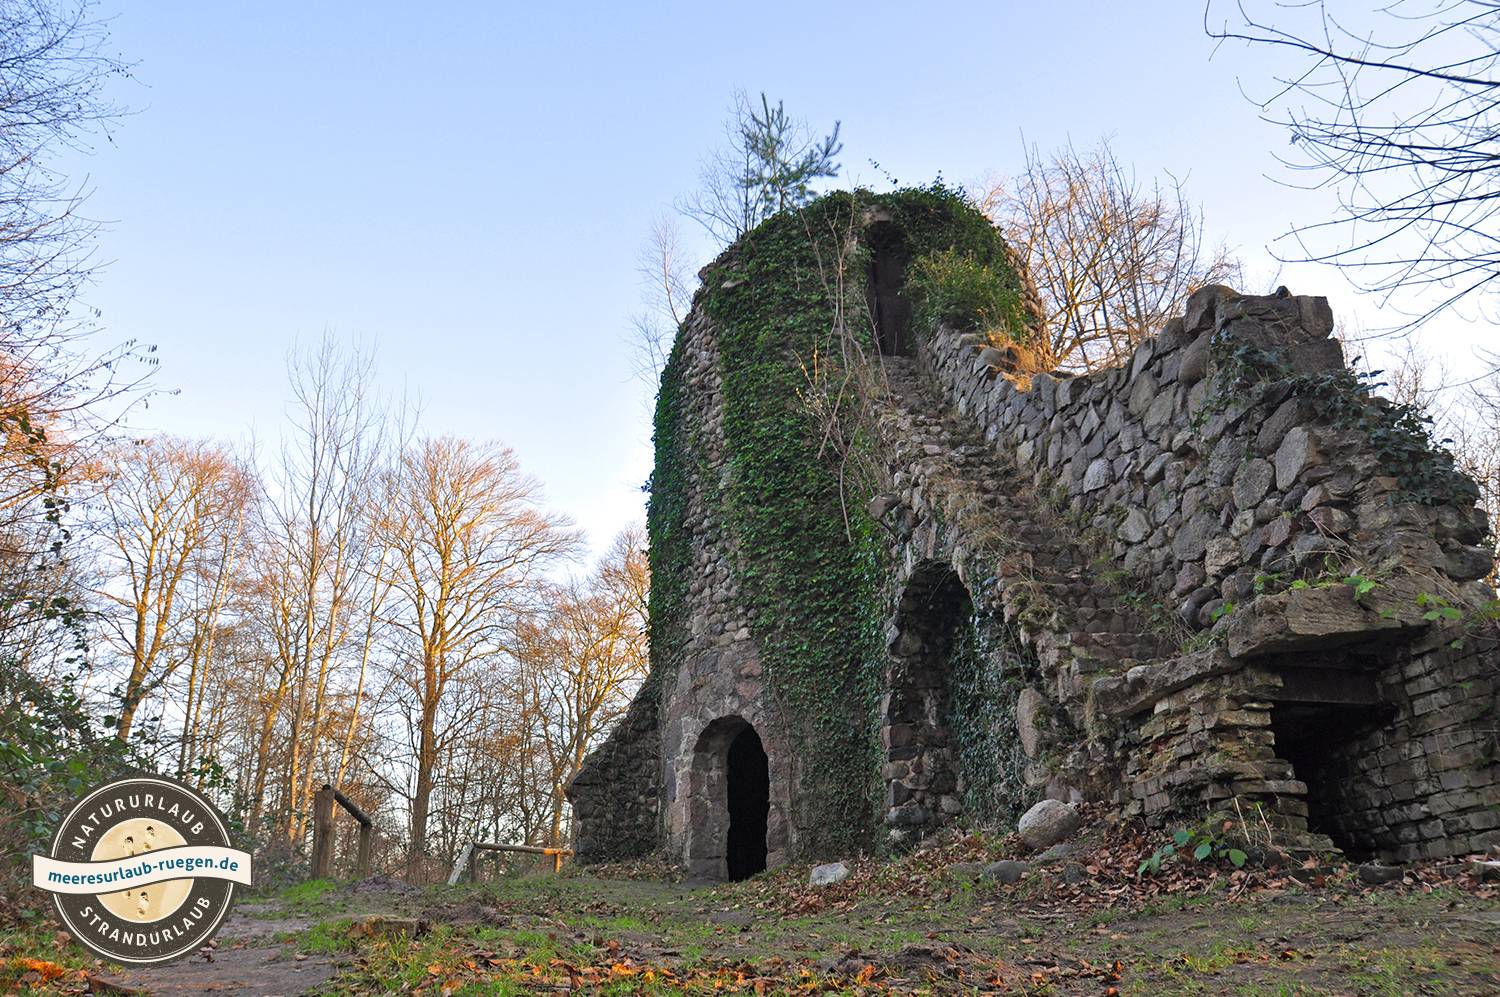 Der Wasserturm im Schlosspark Semper bei Lietzow gehört zu den geheimsten Fotospots